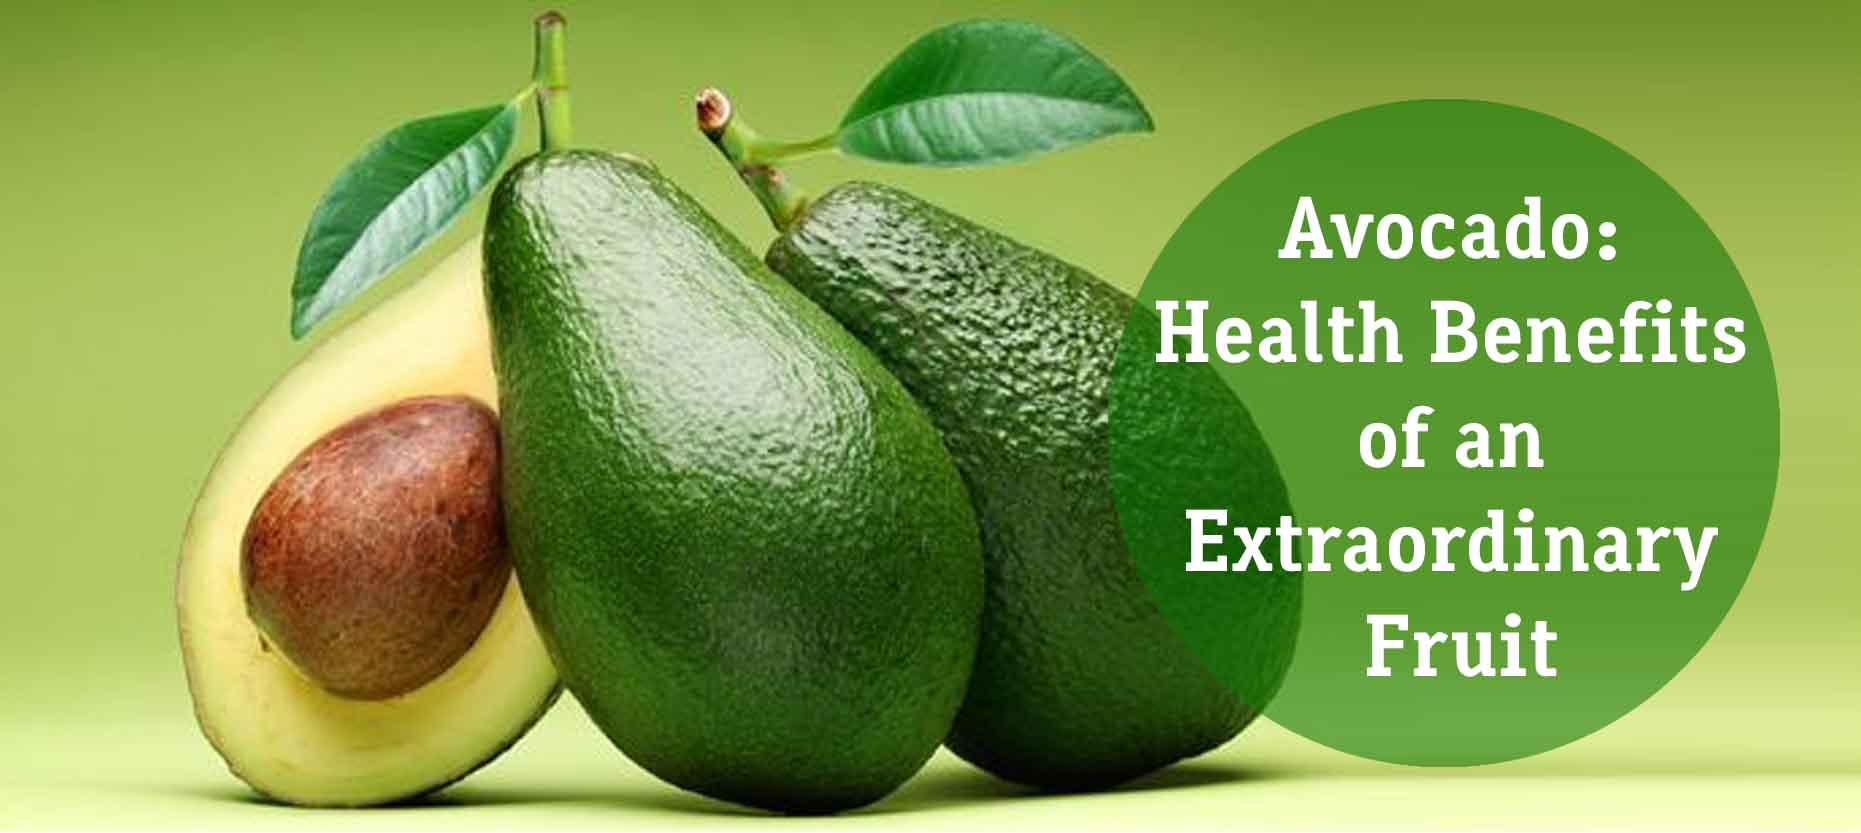 Avocado: Health Benefits of an Extraordinary Fruit